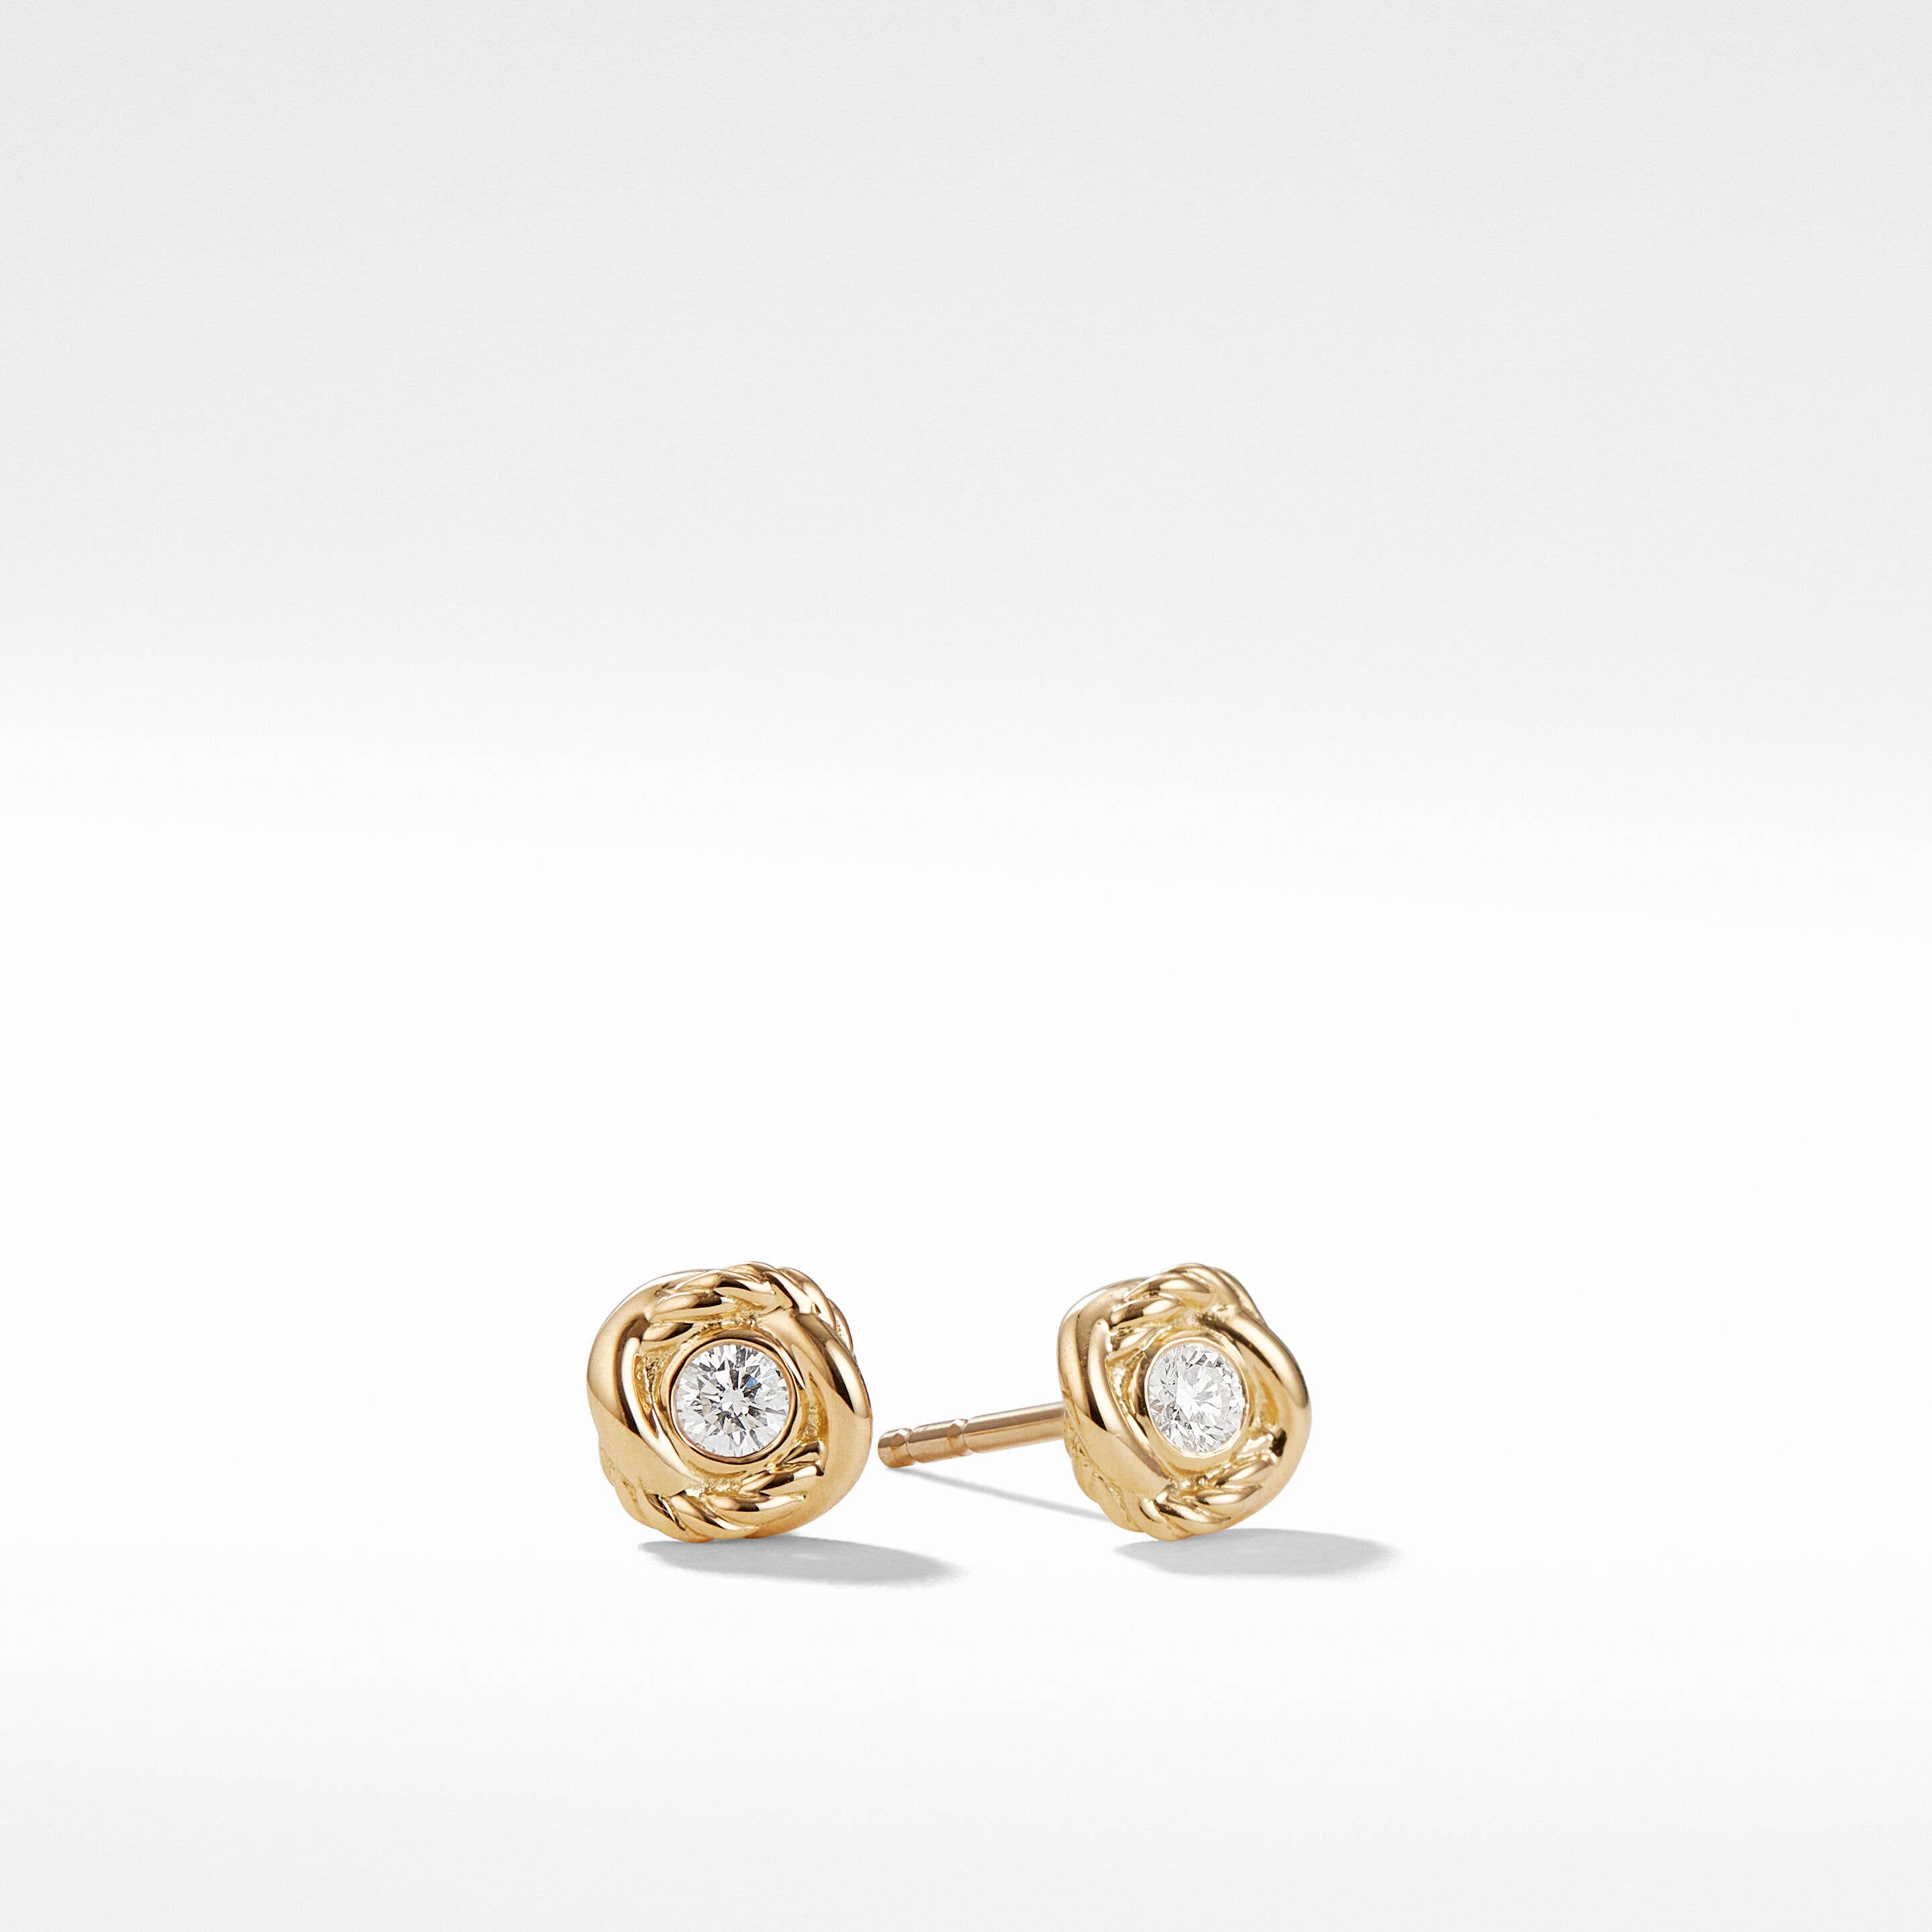 Infinity Stud Earrings in 18K Yellow Gold with Diamonds